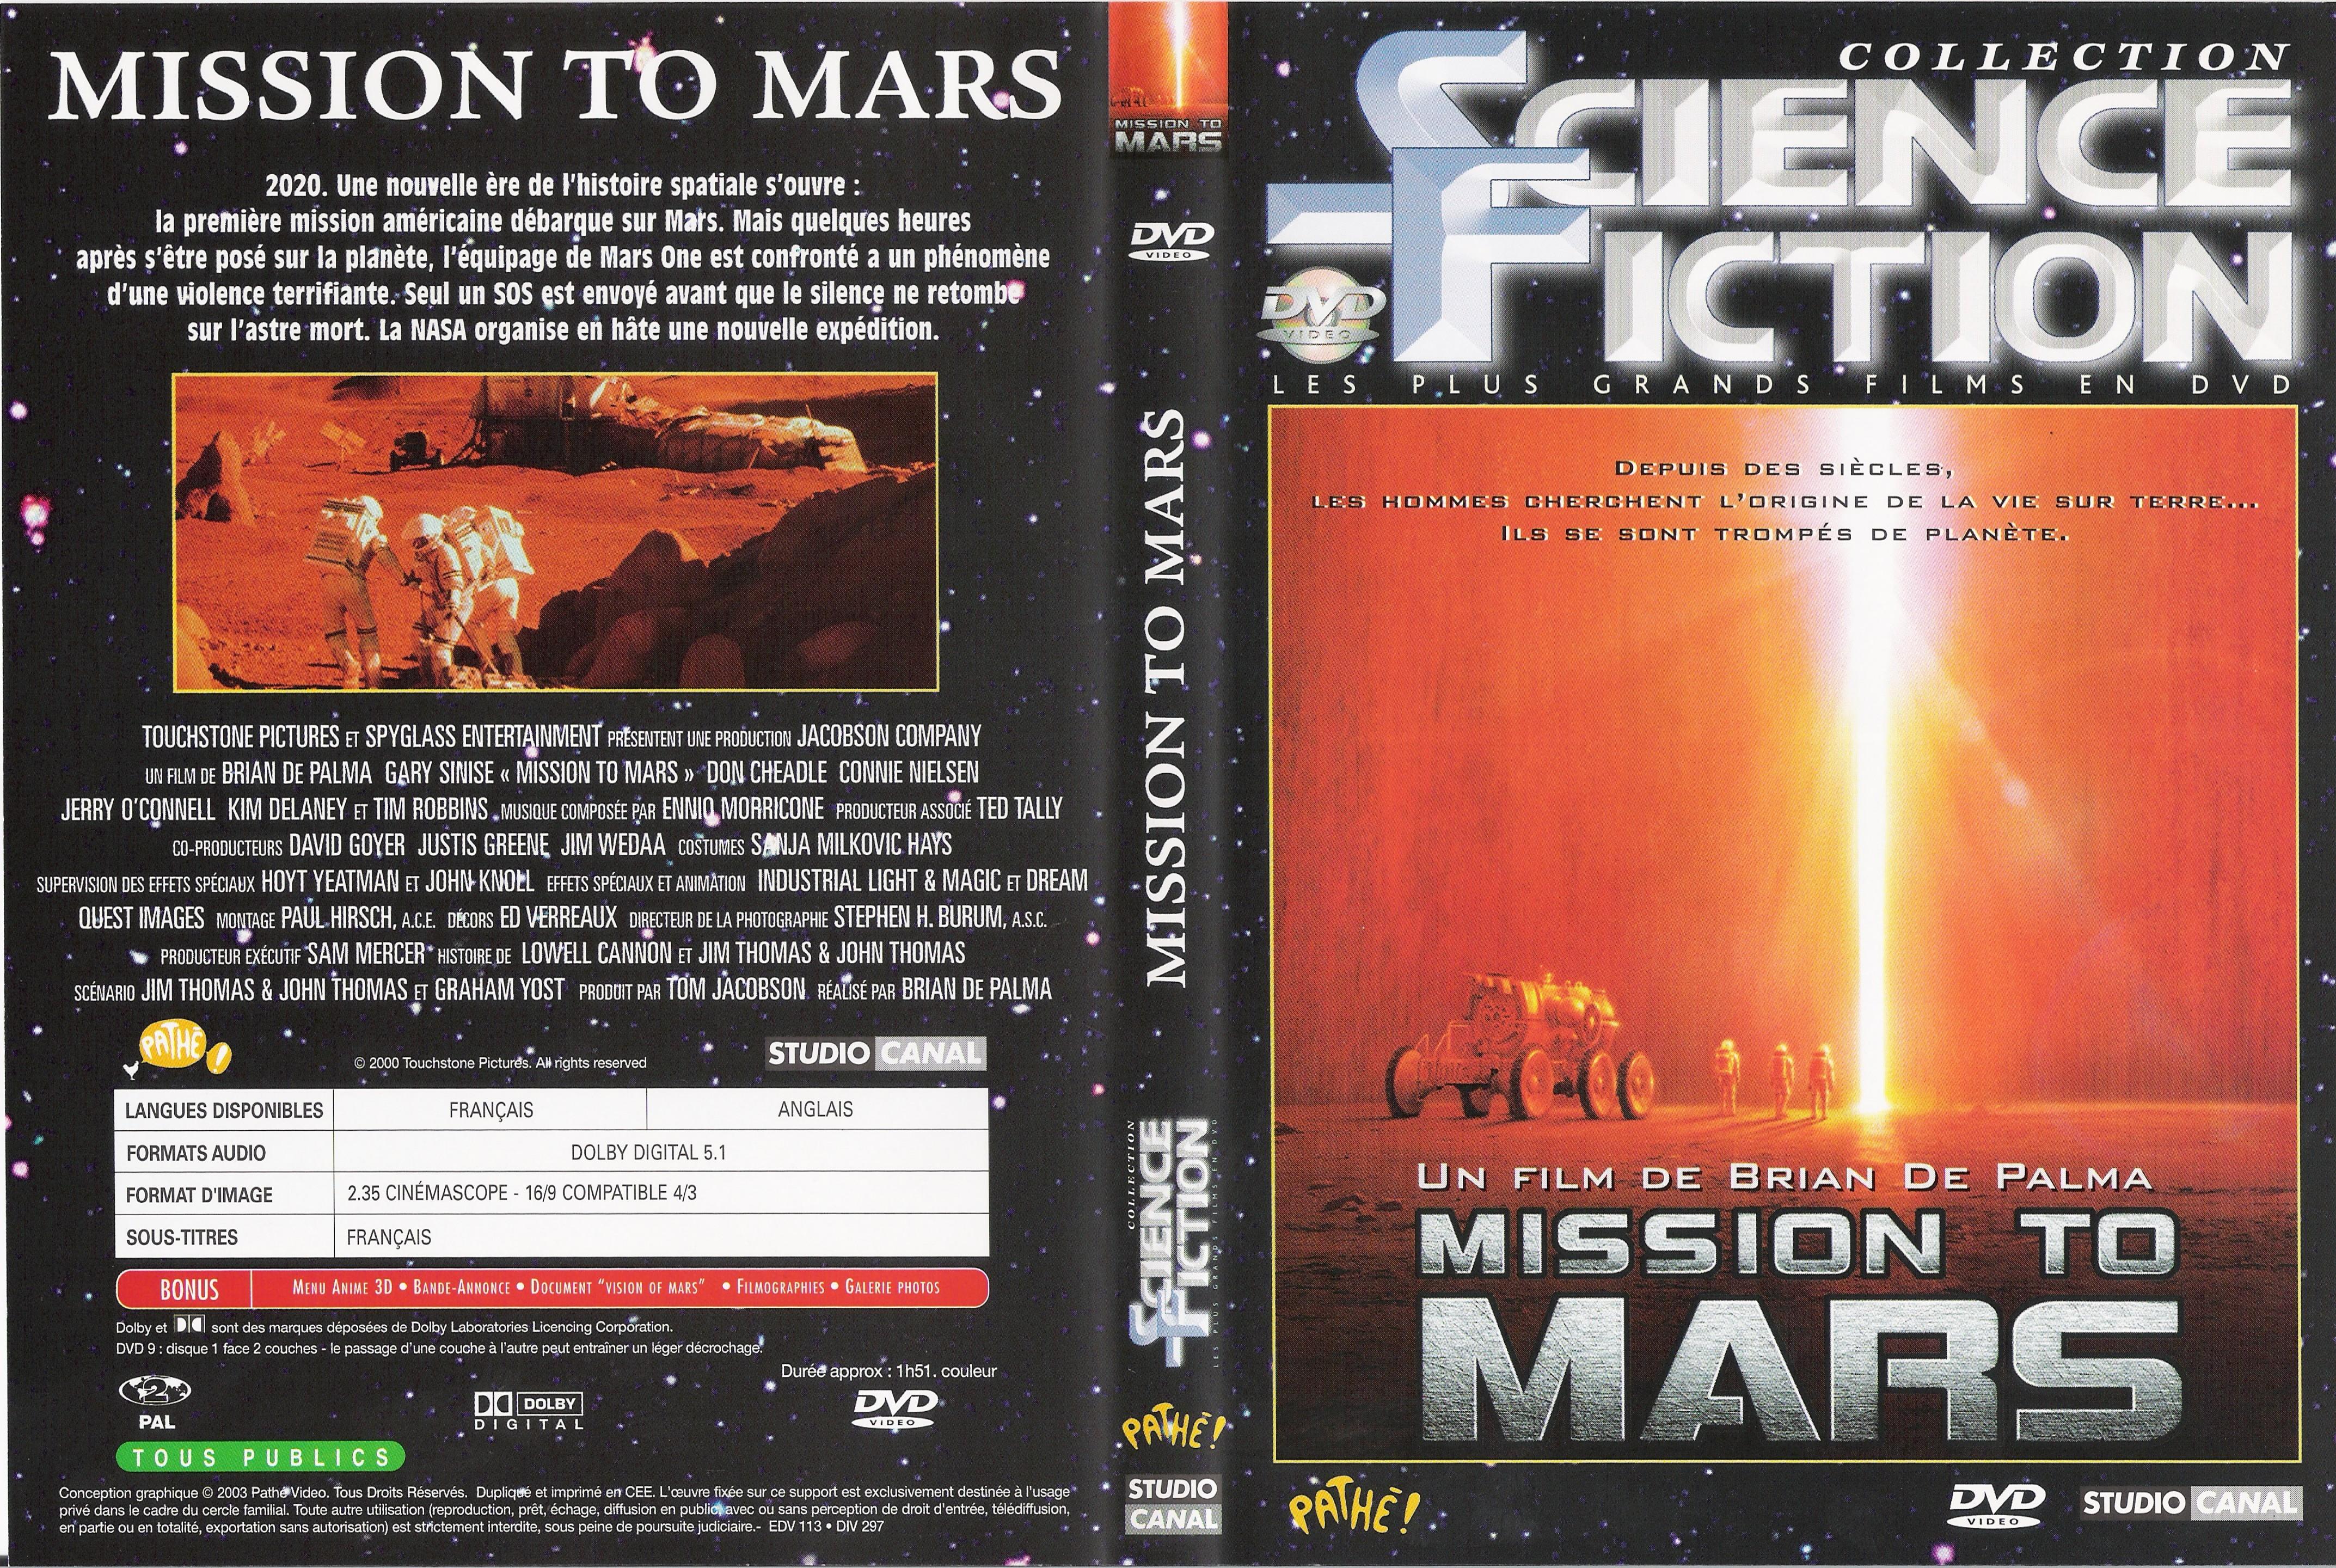 Jaquette DVD Mission to Mars v2